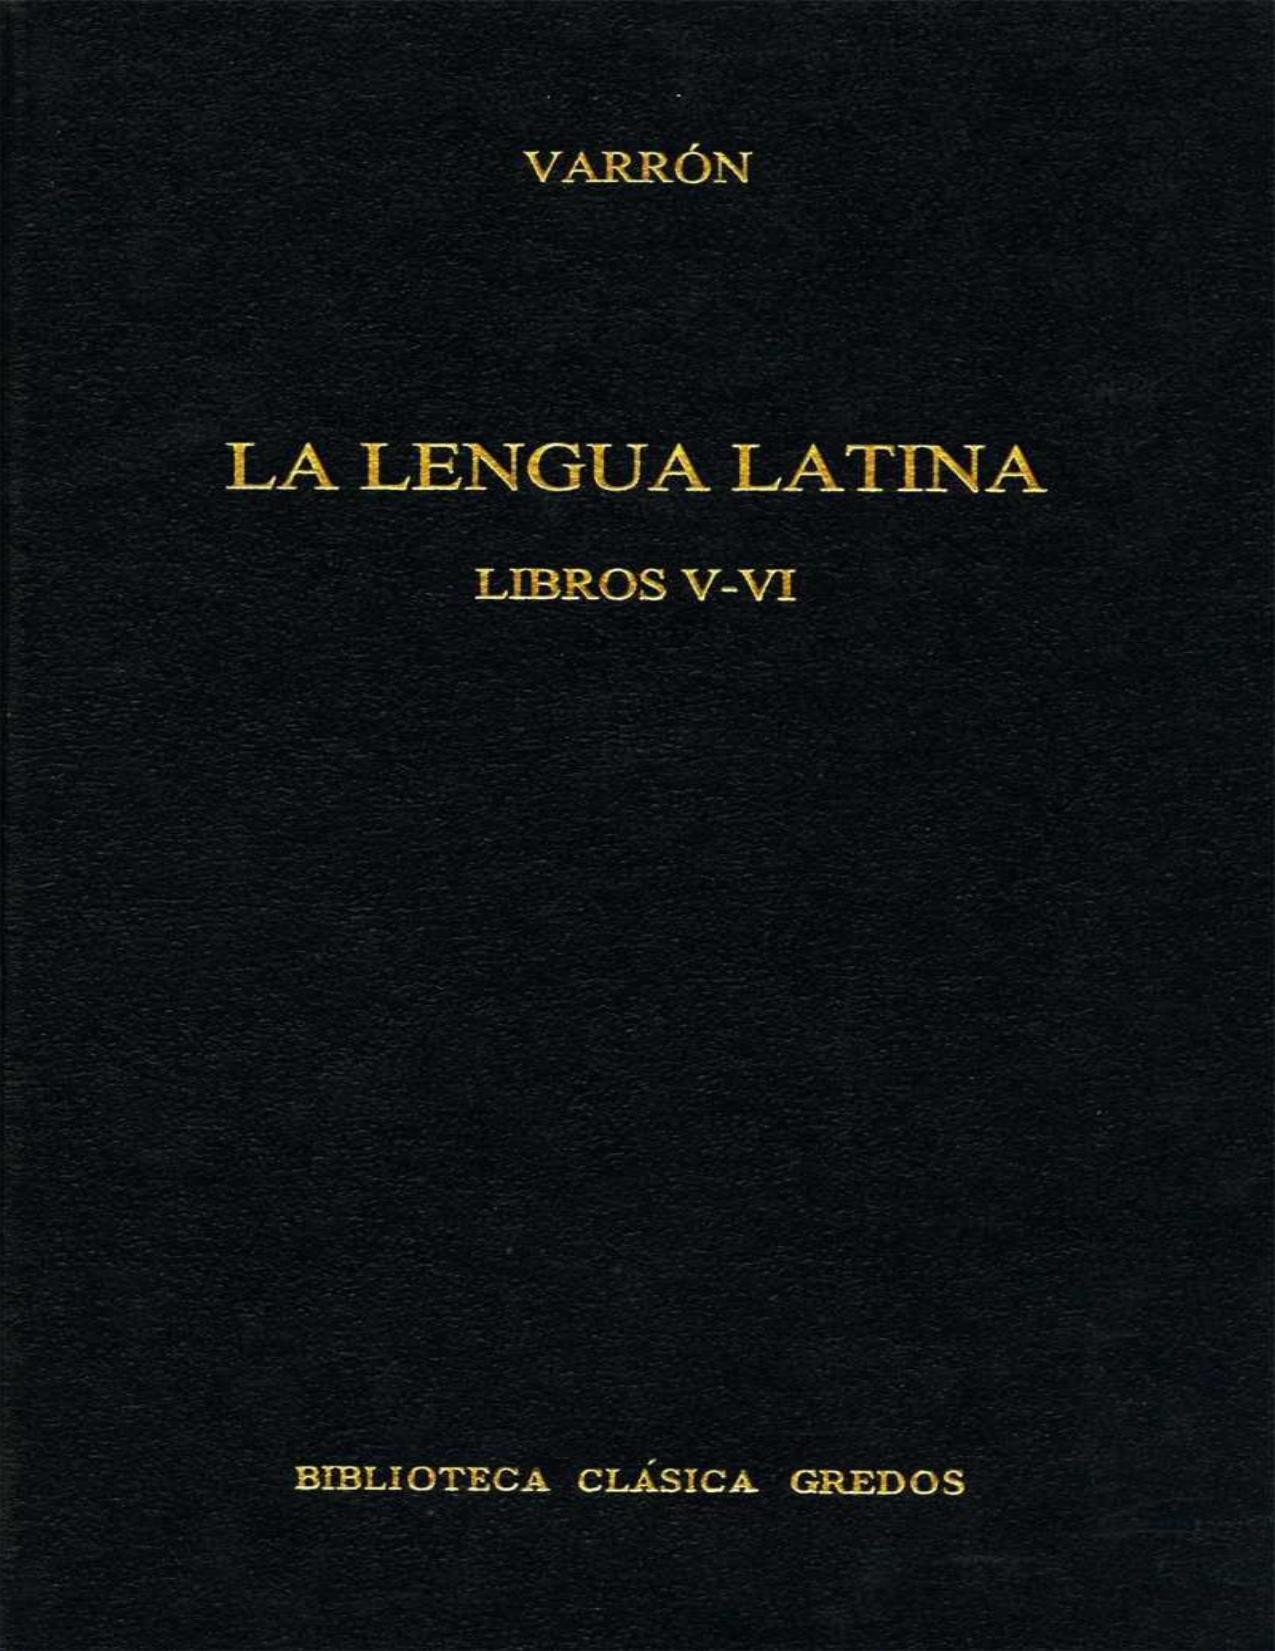 La Lengua latina